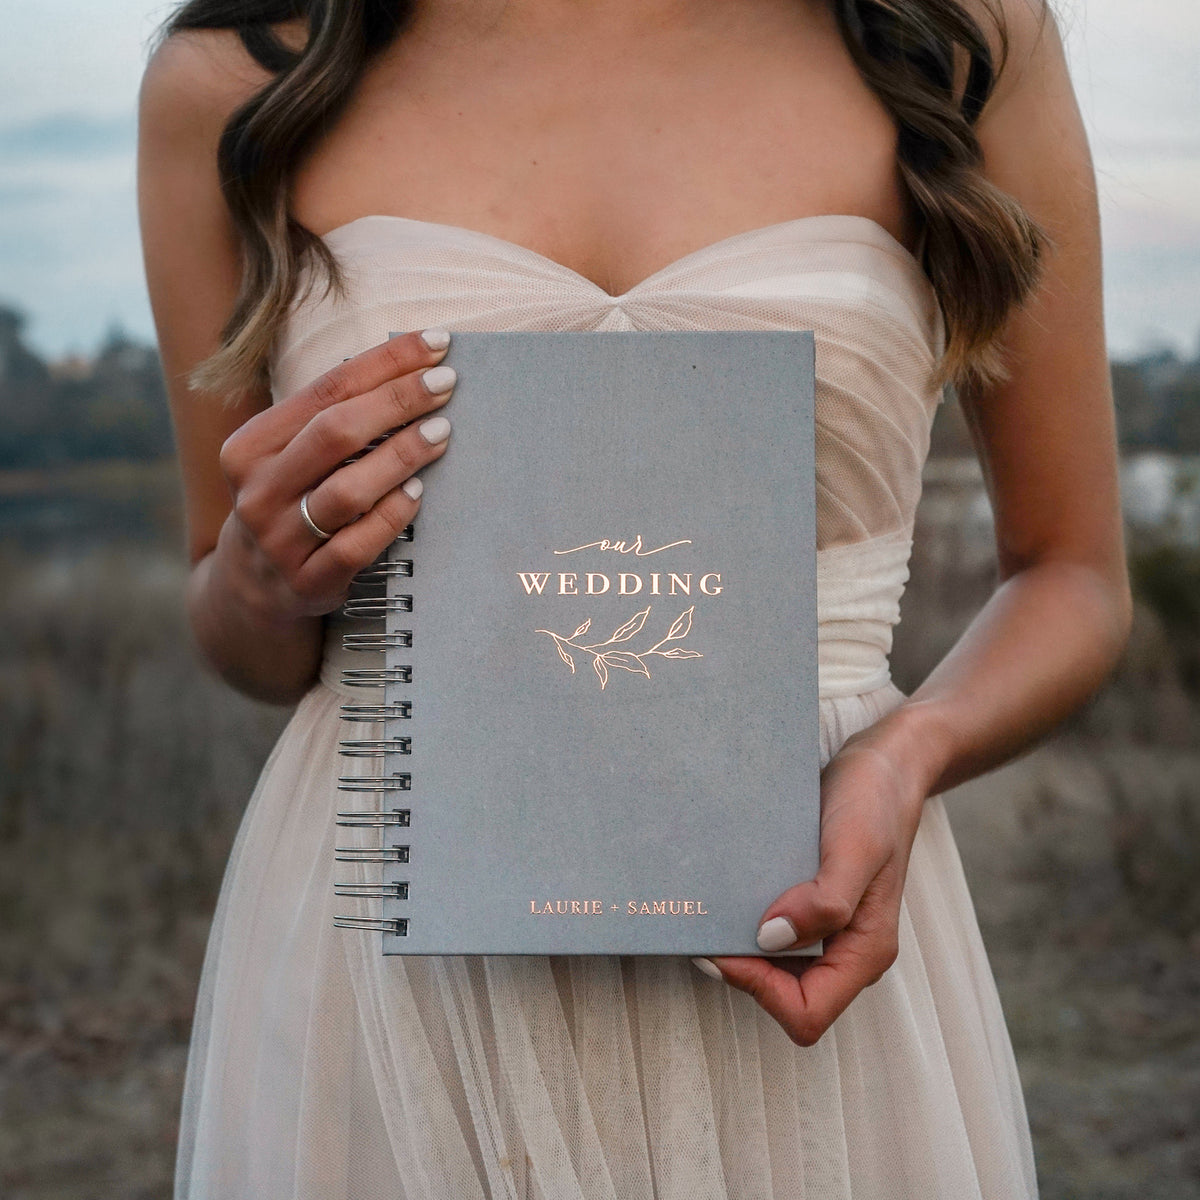 Wedding Planner & Organizer ,Romantic Wedding Planner,Double Adhesive Paper  Note Book 